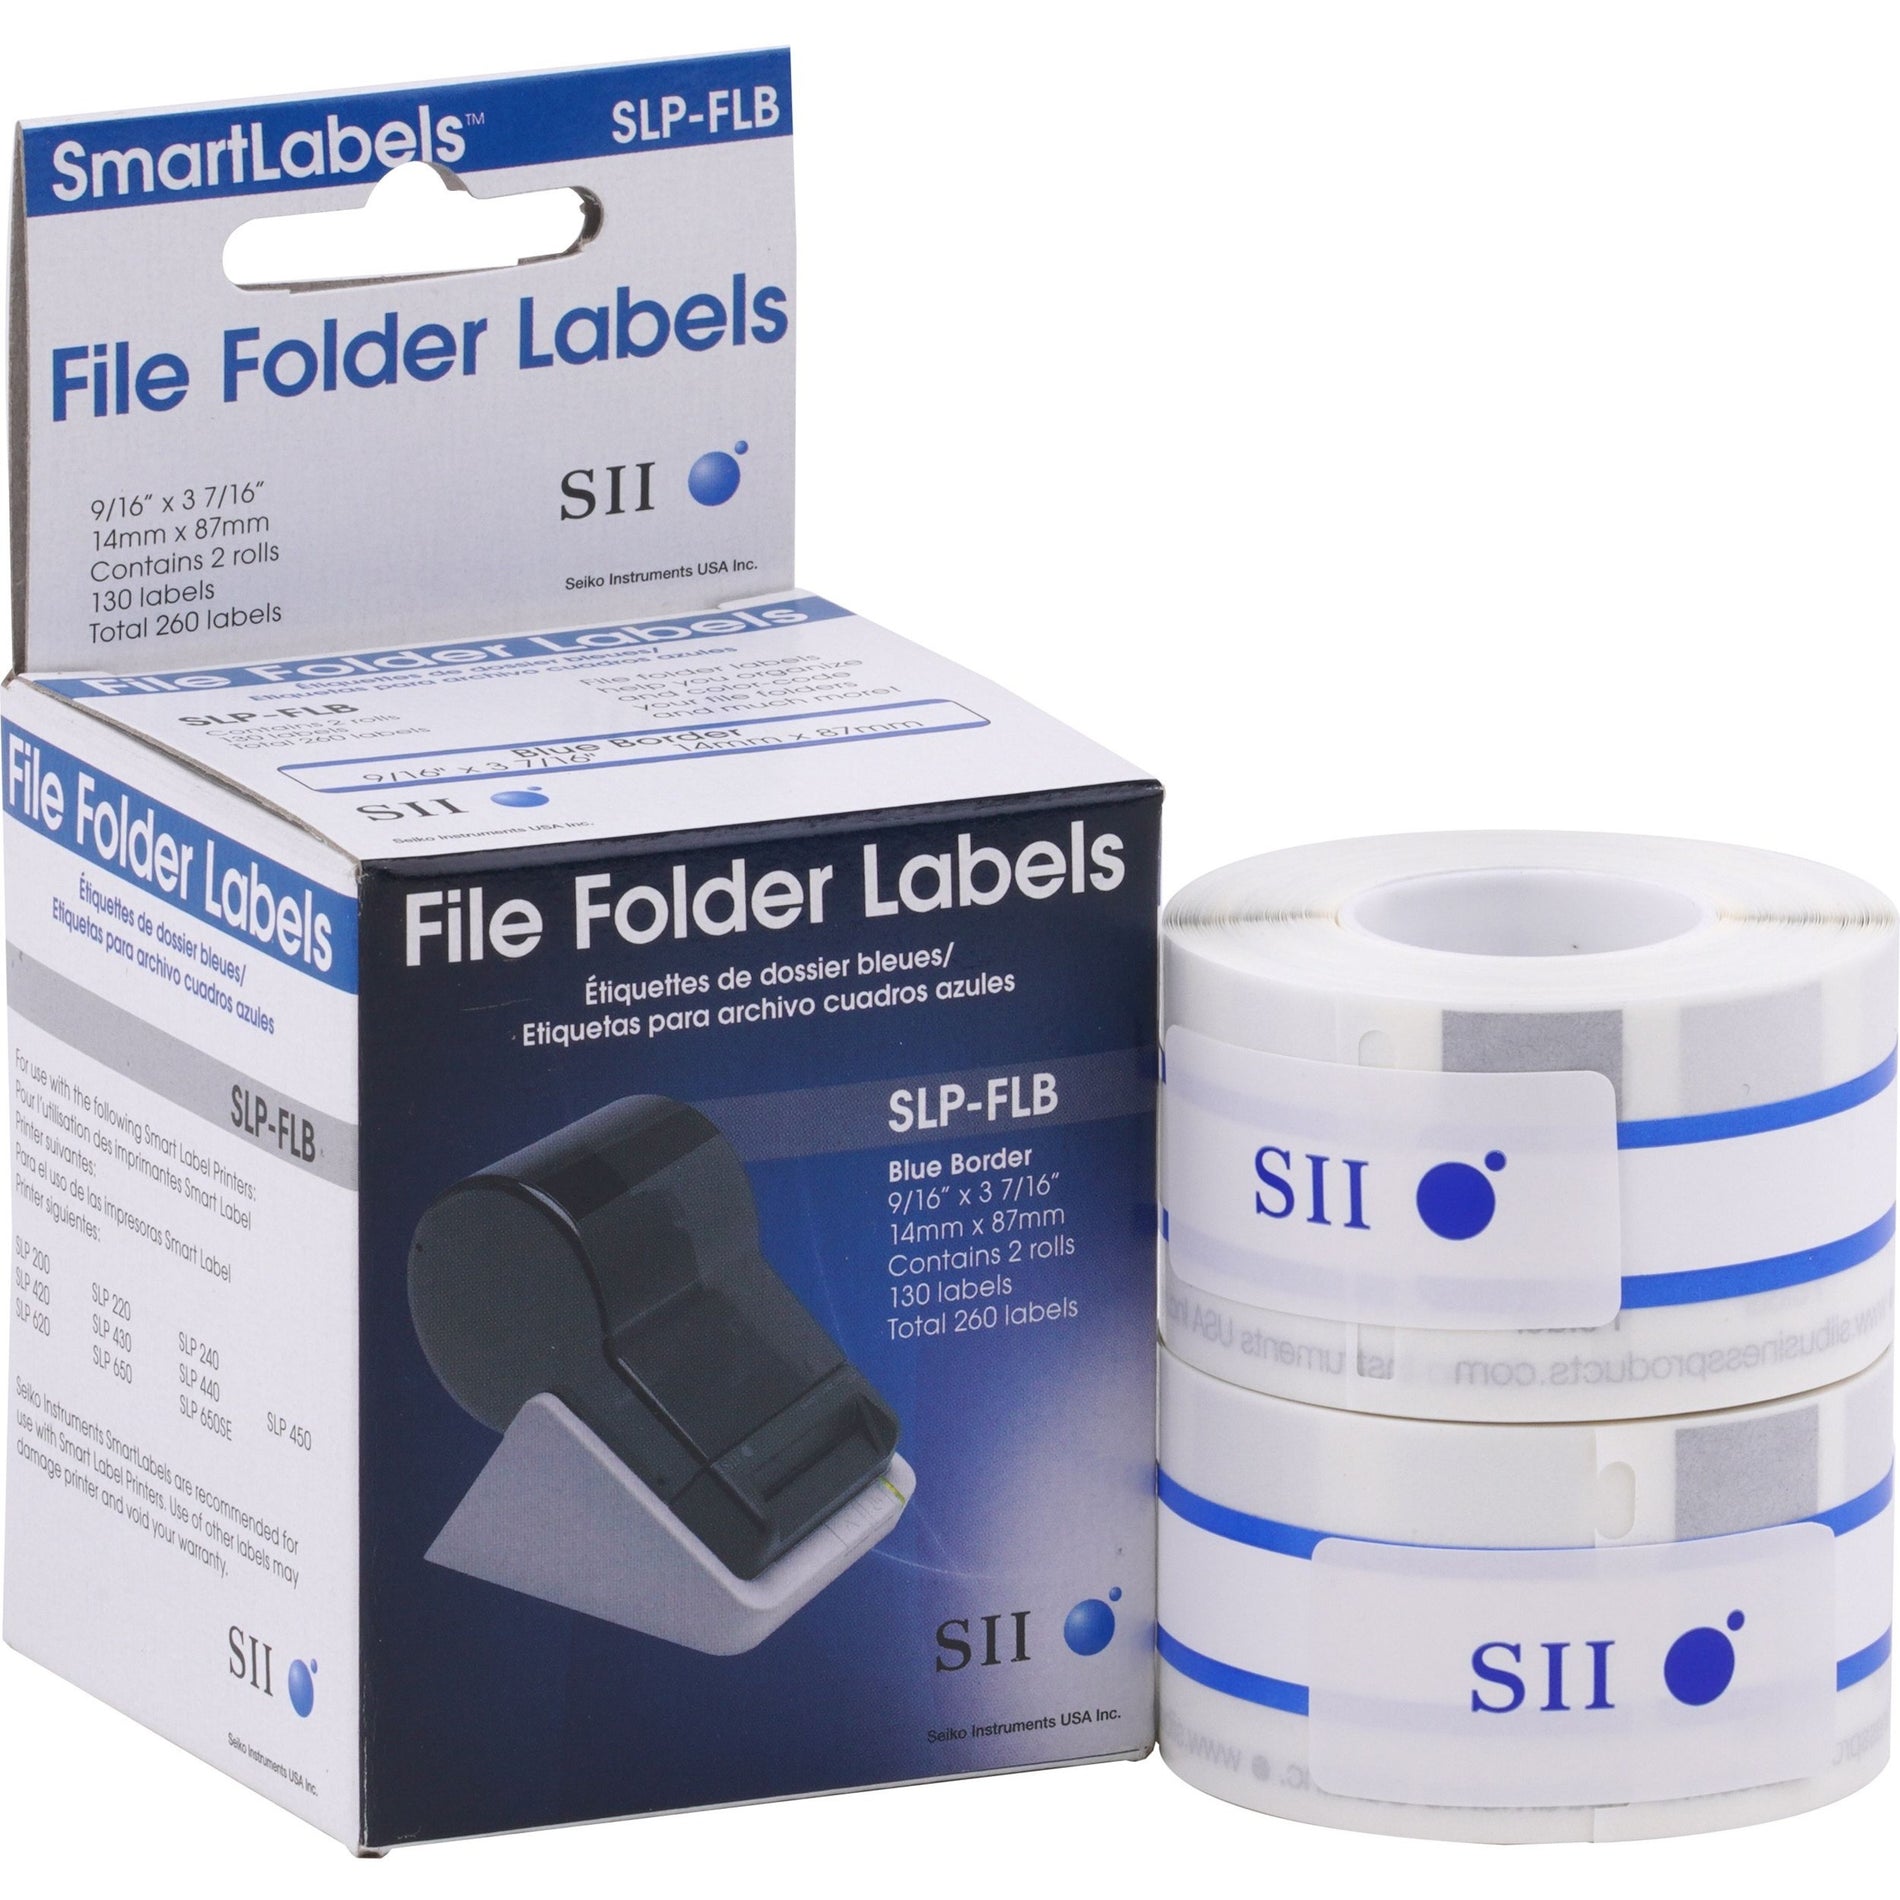 Seiko SLP-FLB SmartLabel File Folder Label, Self-adhesive, Blue, 2 Roll